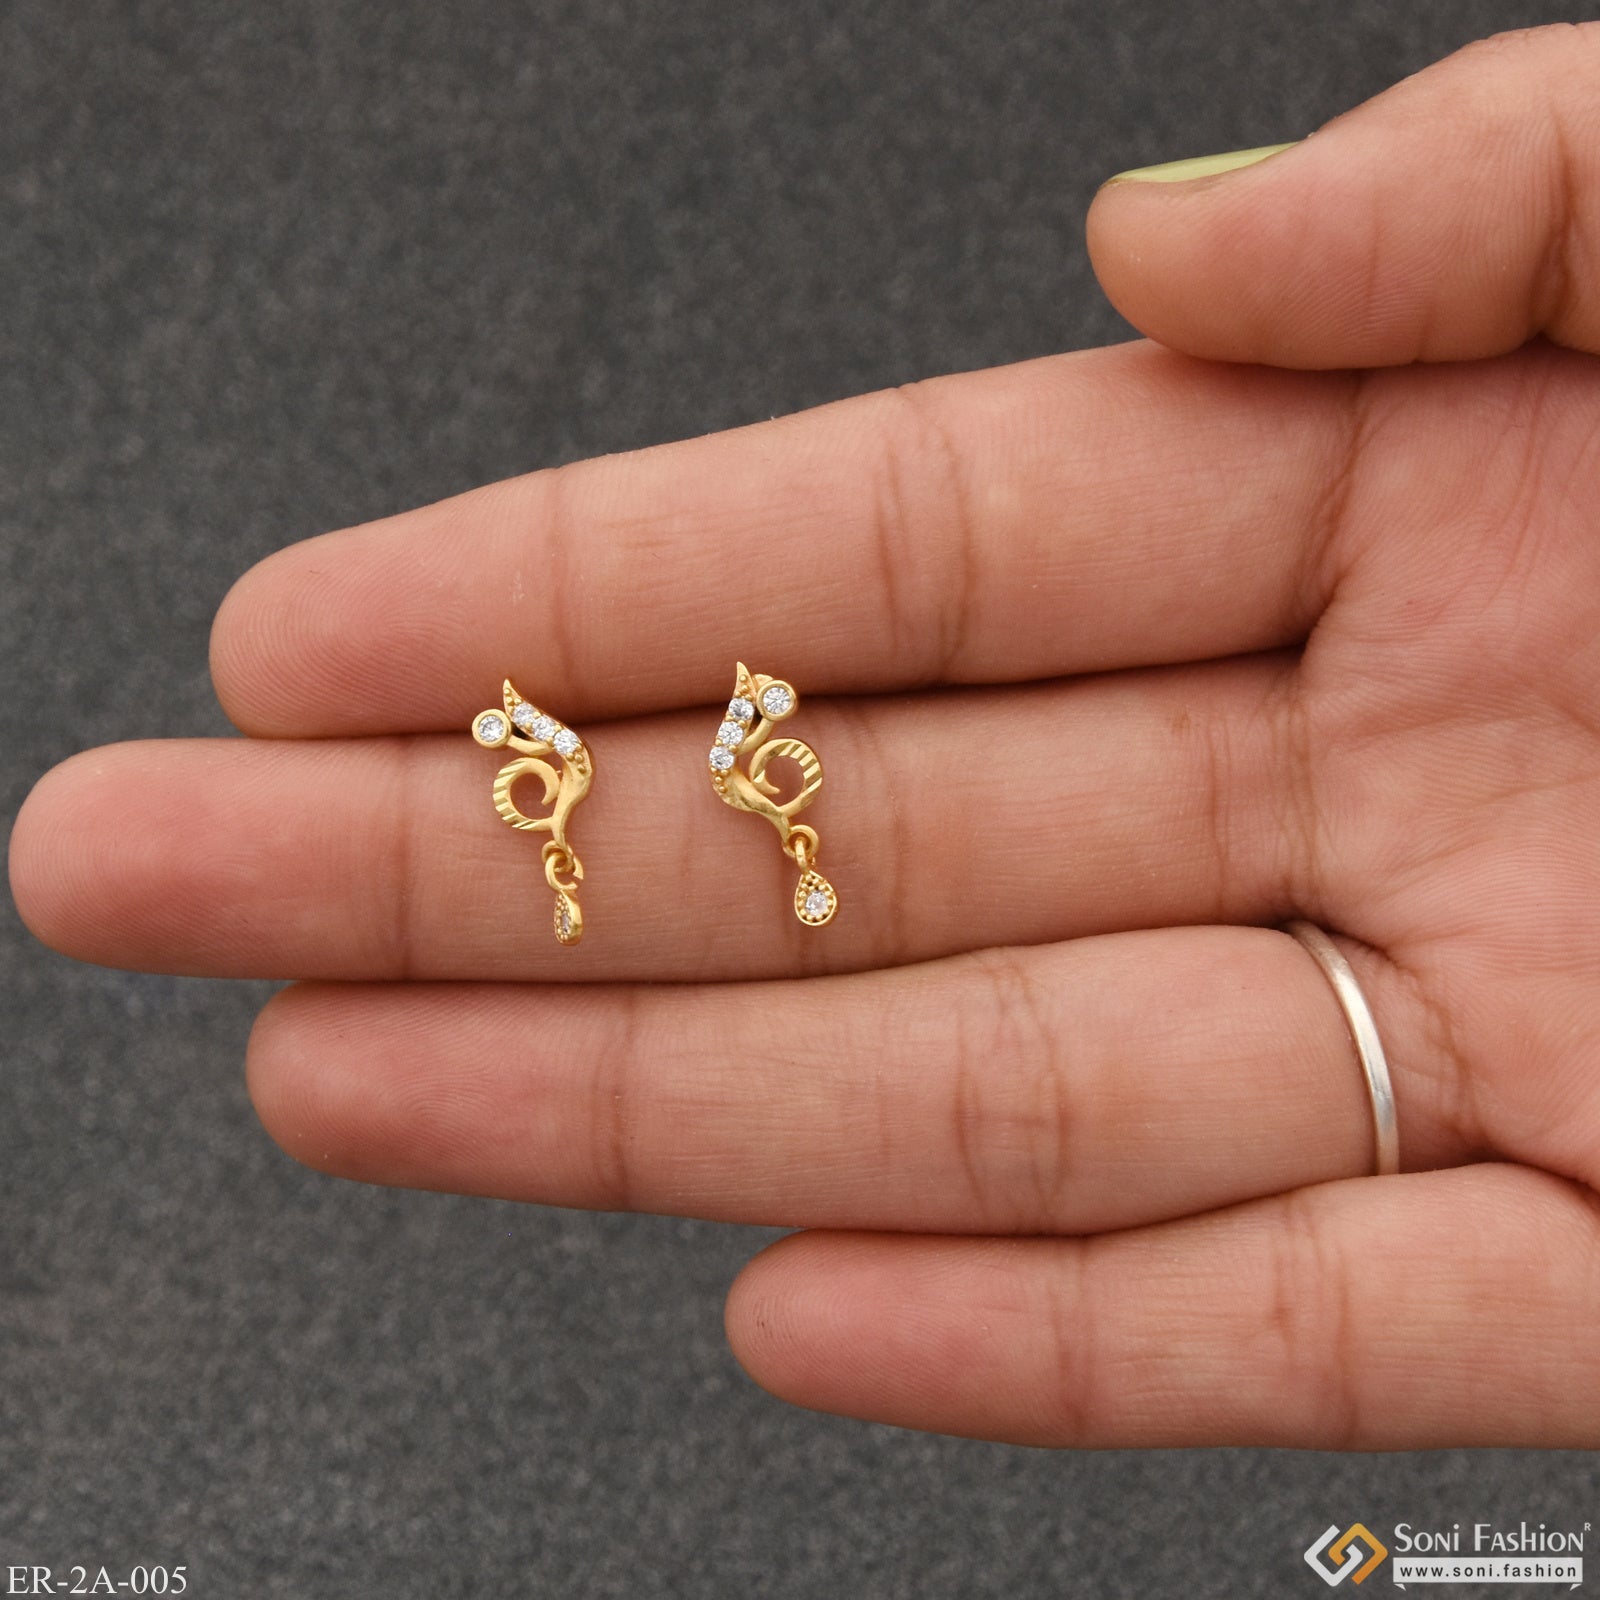 H/SI Baguette Diamond Stud 14k Yellow Gold Earrings Birthday Gift 0.20 Ct.  | eBay